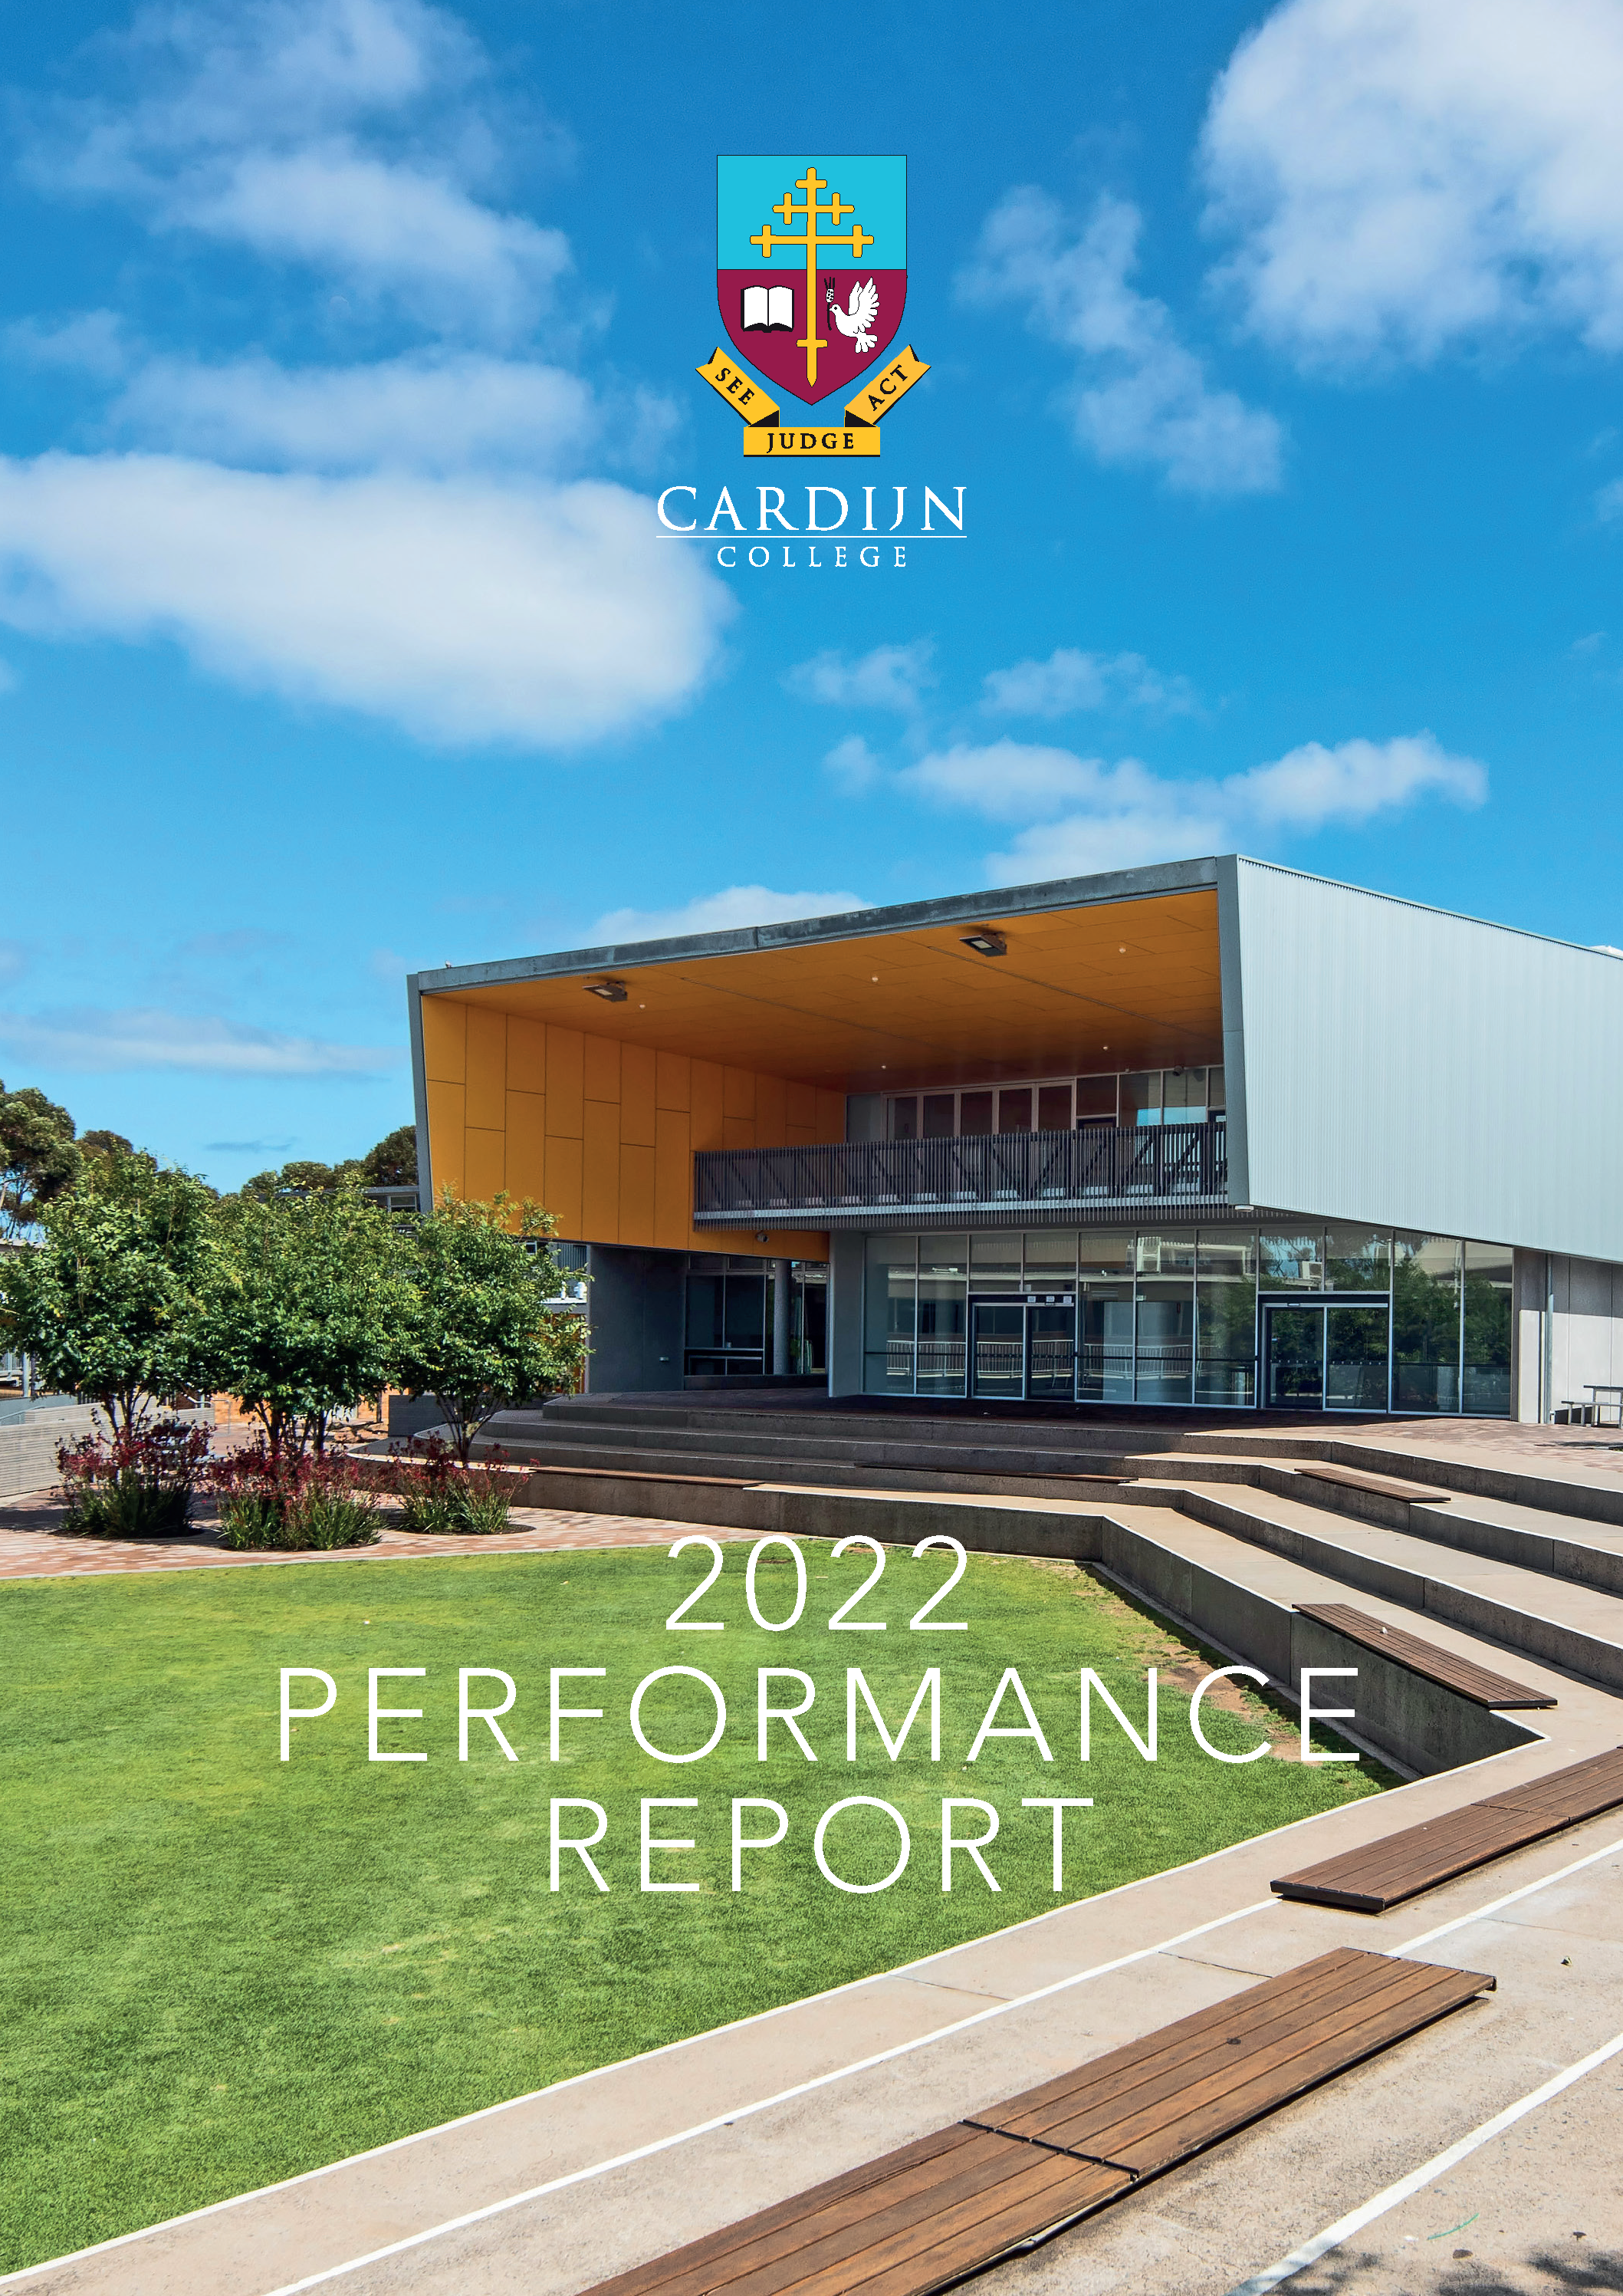 Cardijn College - Cardijn Performance Report 2022 cover.png